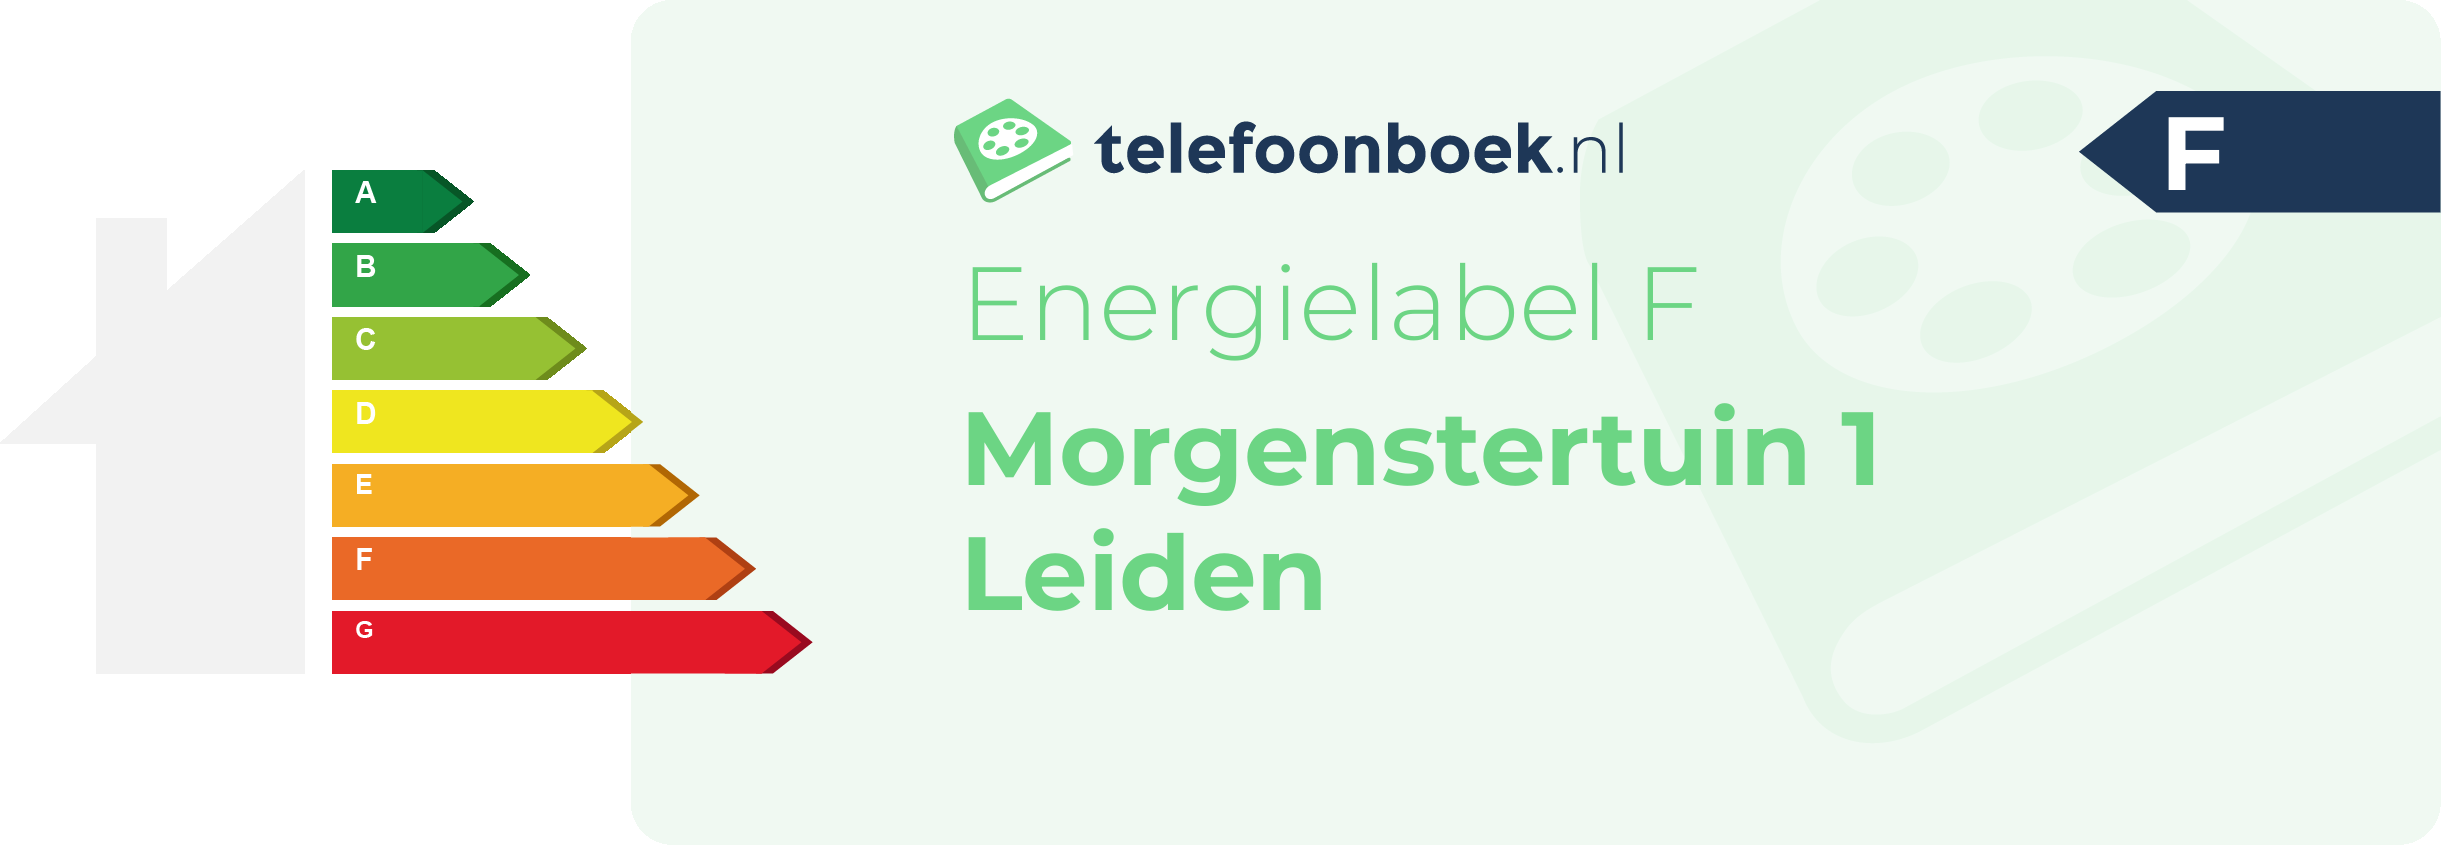 Energielabel Morgenstertuin 1 Leiden